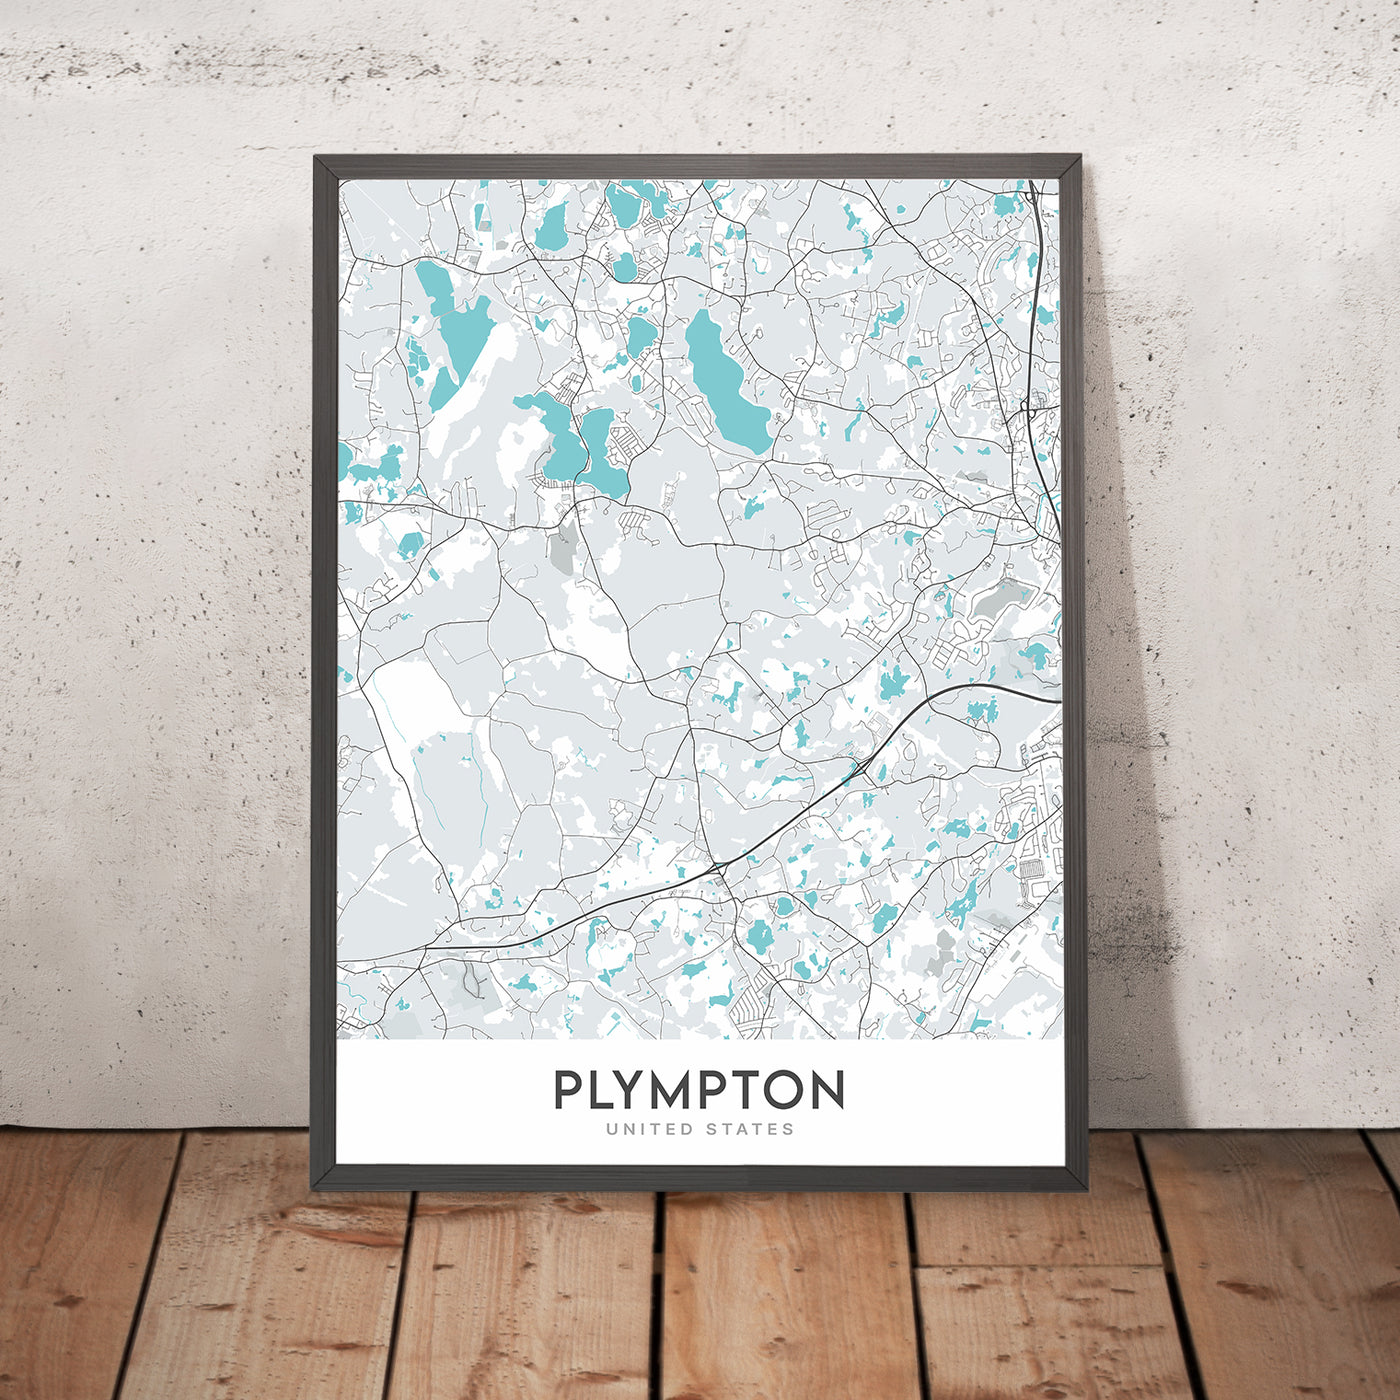 Moderner Stadtplan von Plympton, MA: Plympton Town Hall, Plympton Public Library, Plympton High School, MA-106, US-44